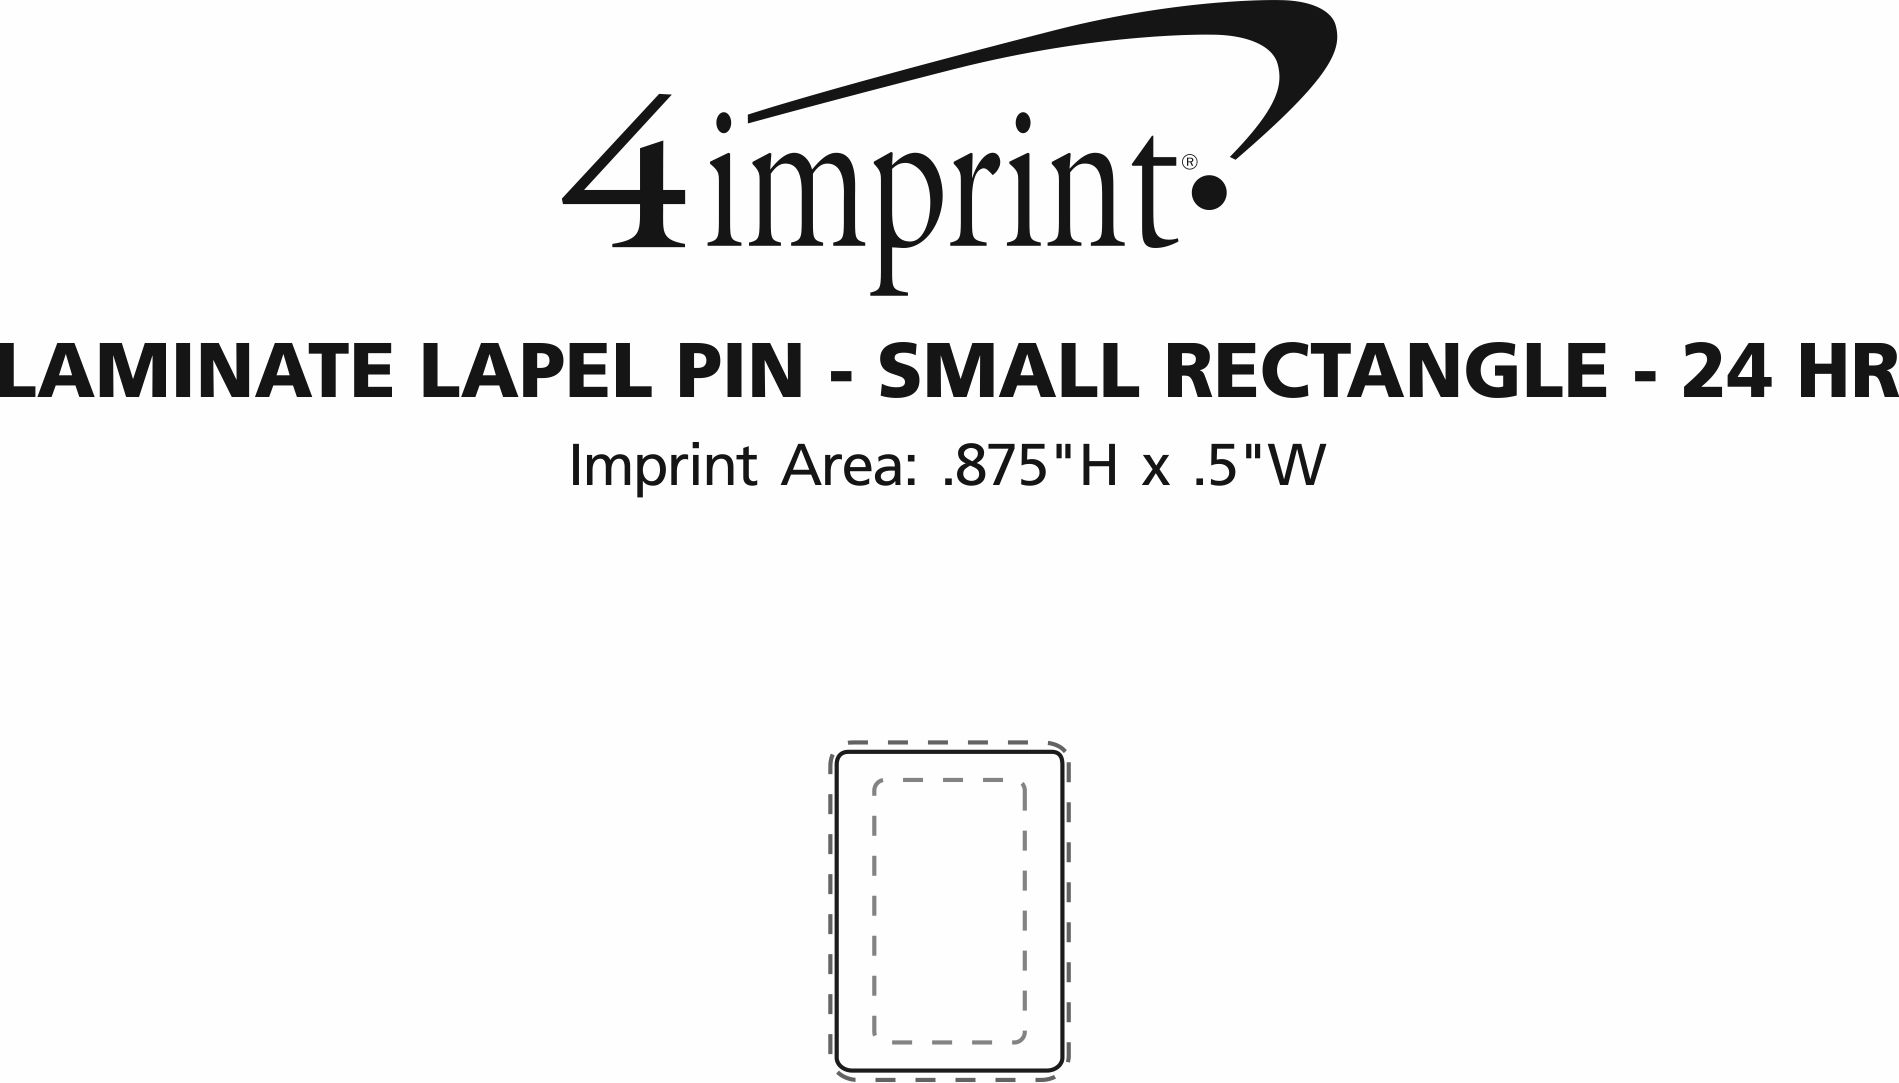 Imprint Area of Laminate Lapel Pin - Small Rectangle - 24 hr